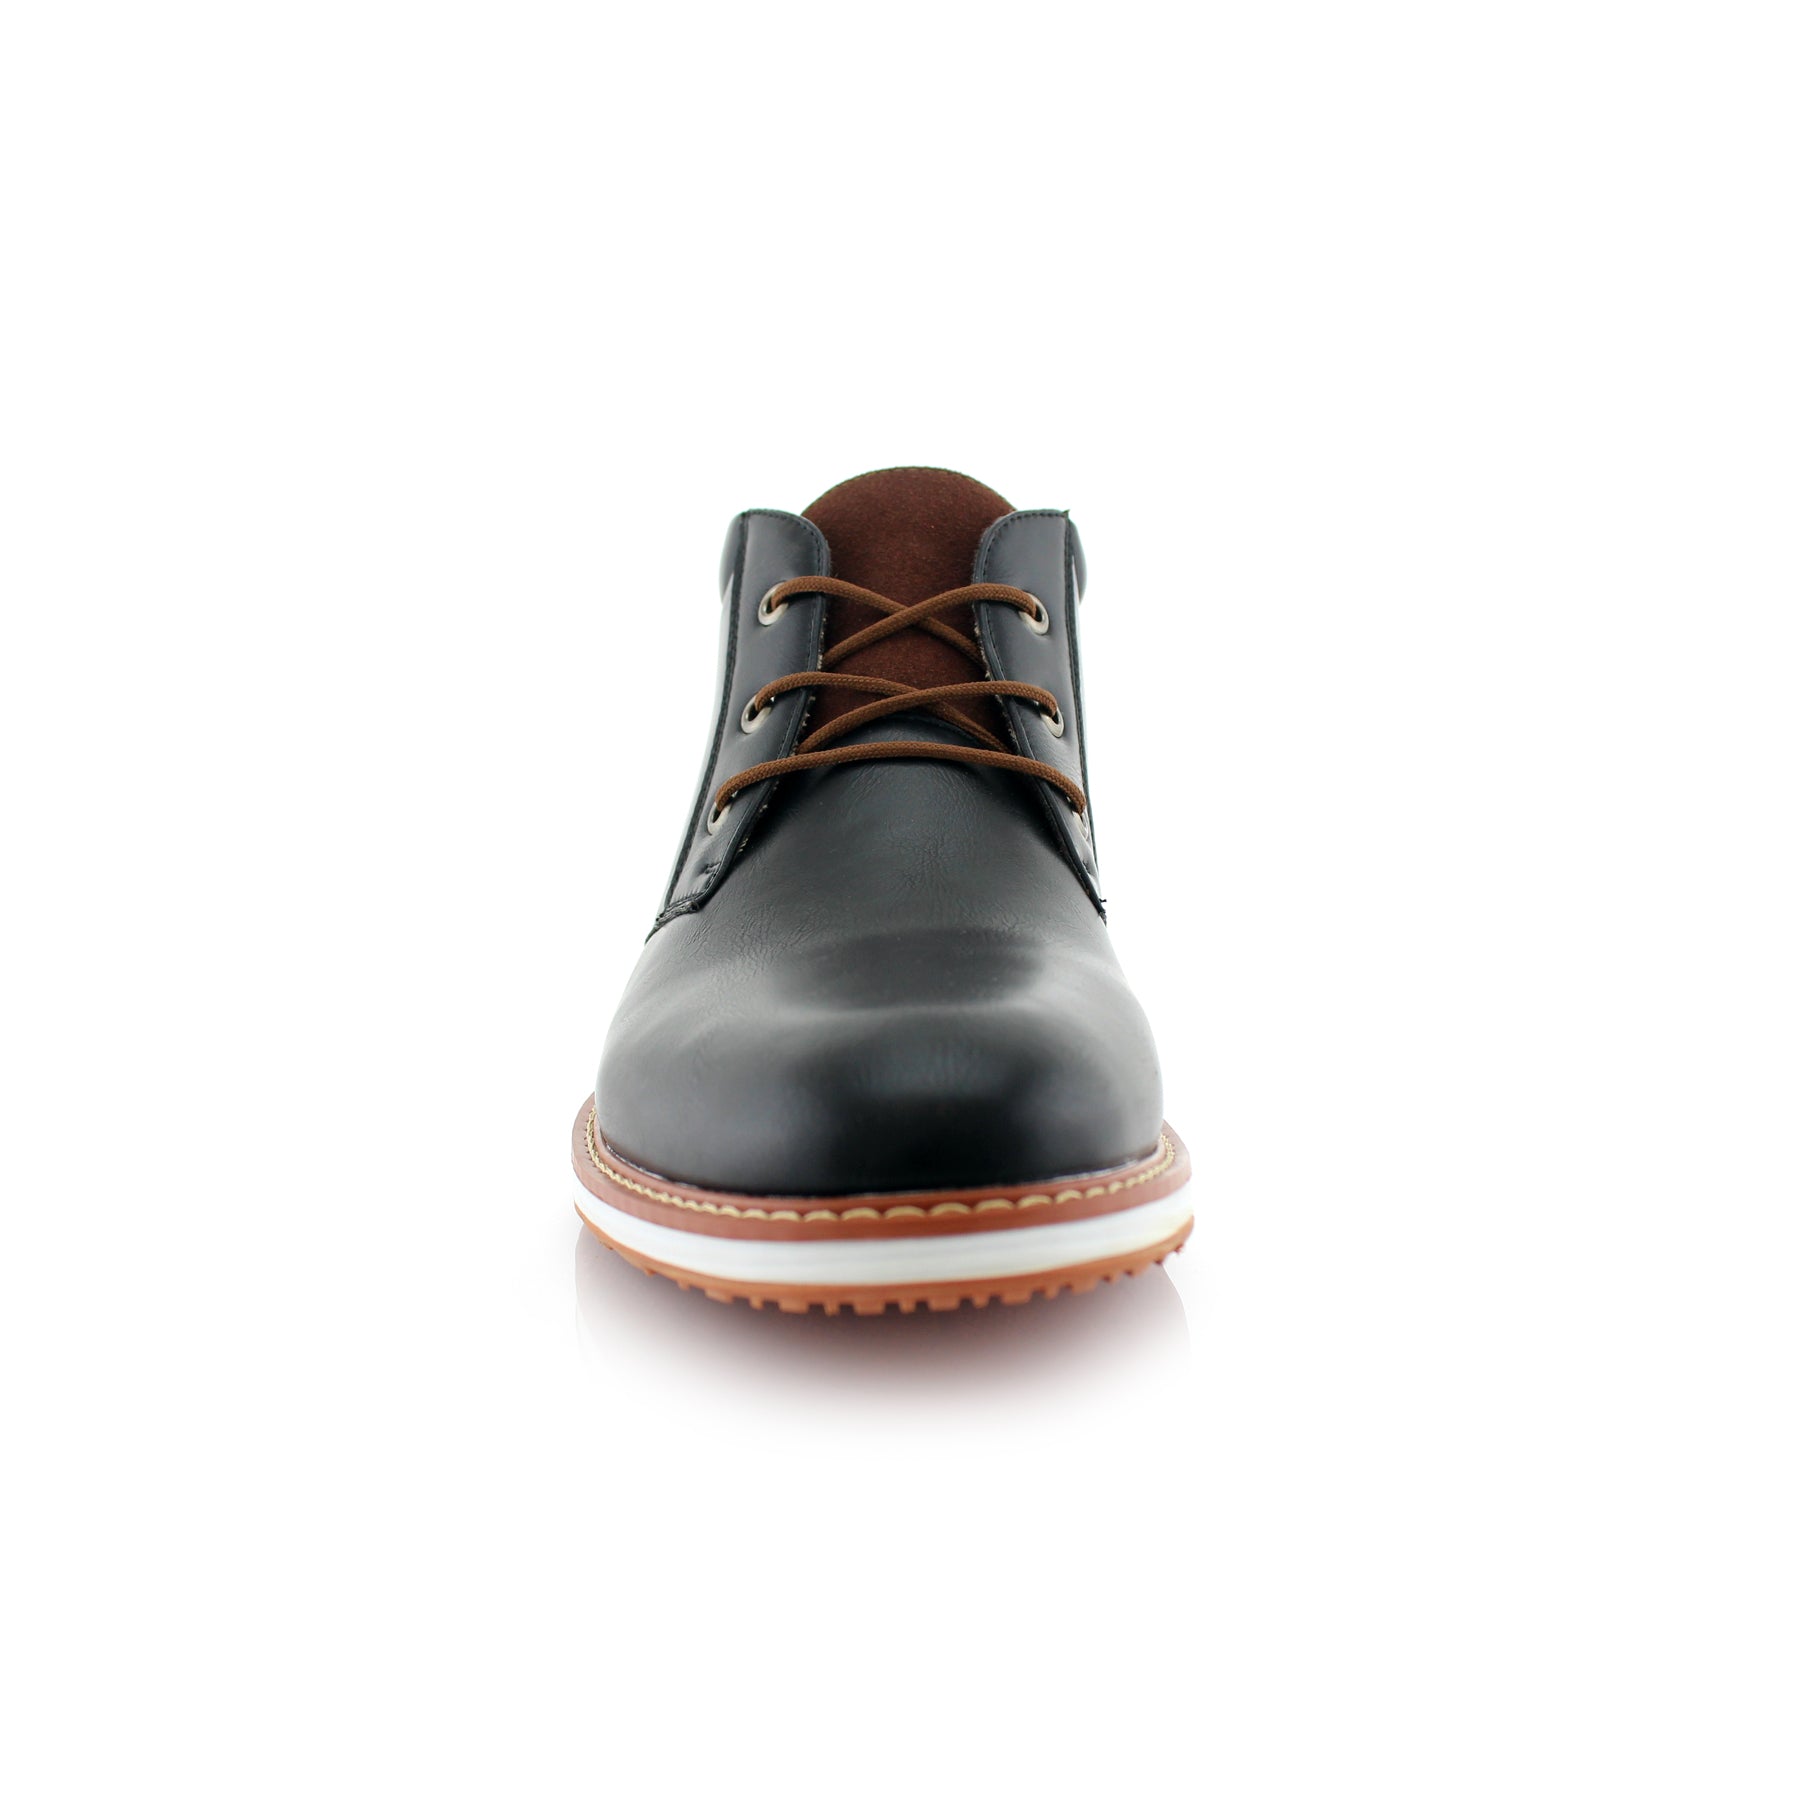 Sneaker Chukka Boots | Houstan by Ferro Aldo | Conal Footwear | Front Angle View